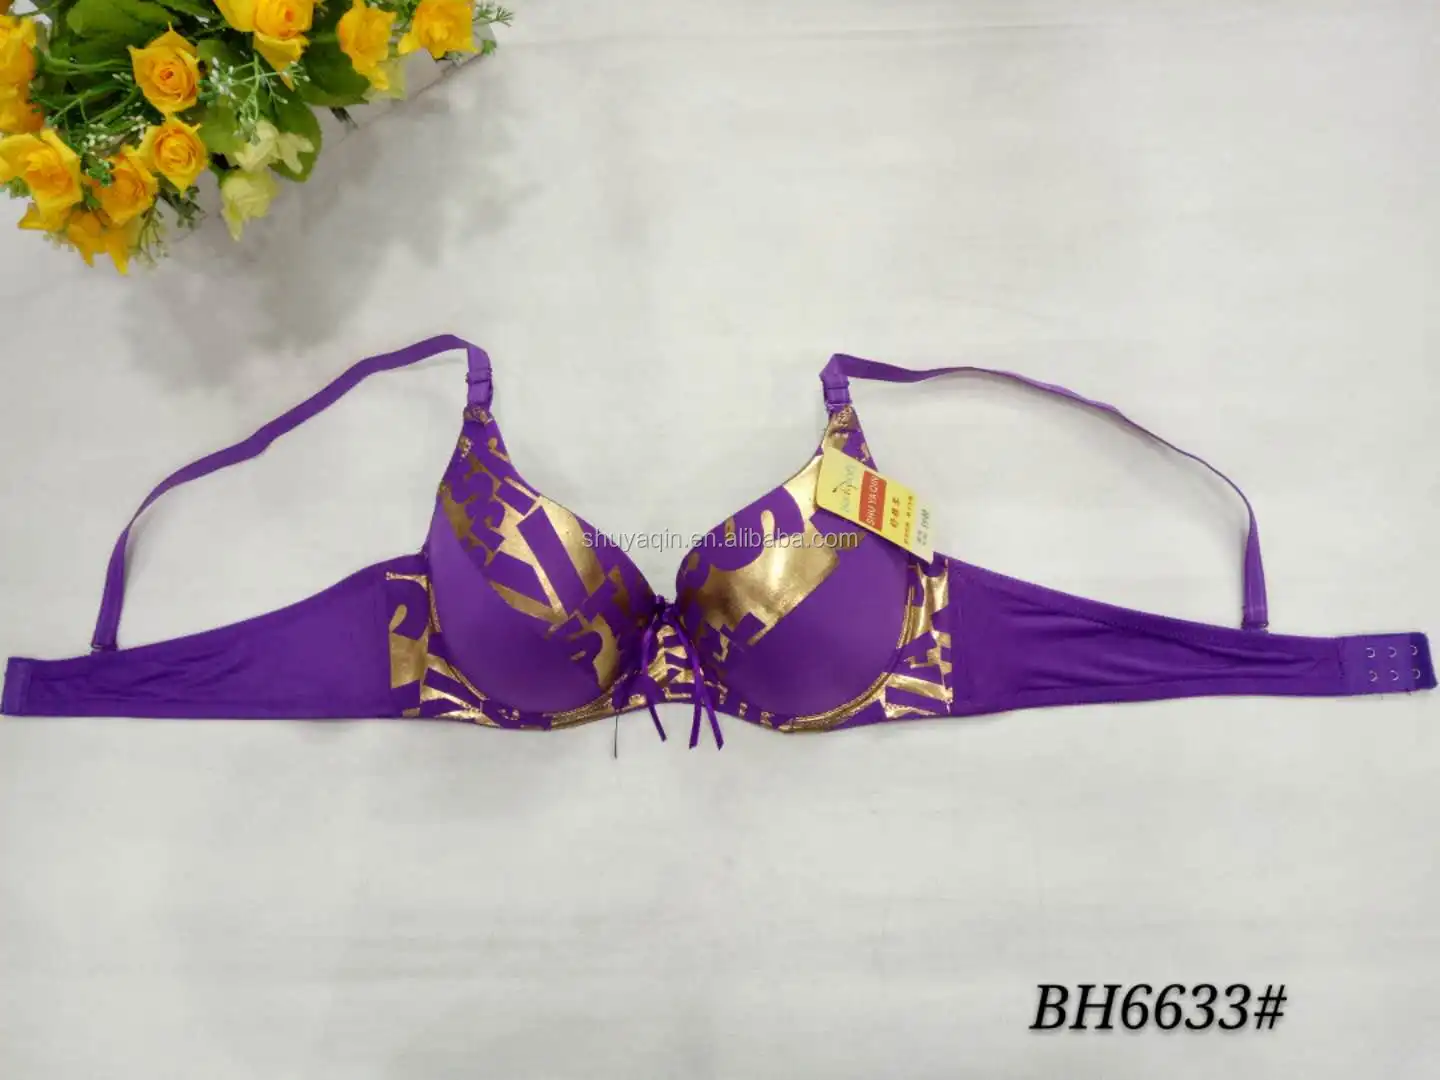 Lubunie-sujetador Push Up Copa Barata Para Mujer 6633 # - Buy New Bra,Women Underwear,Women Product on Alibaba.com